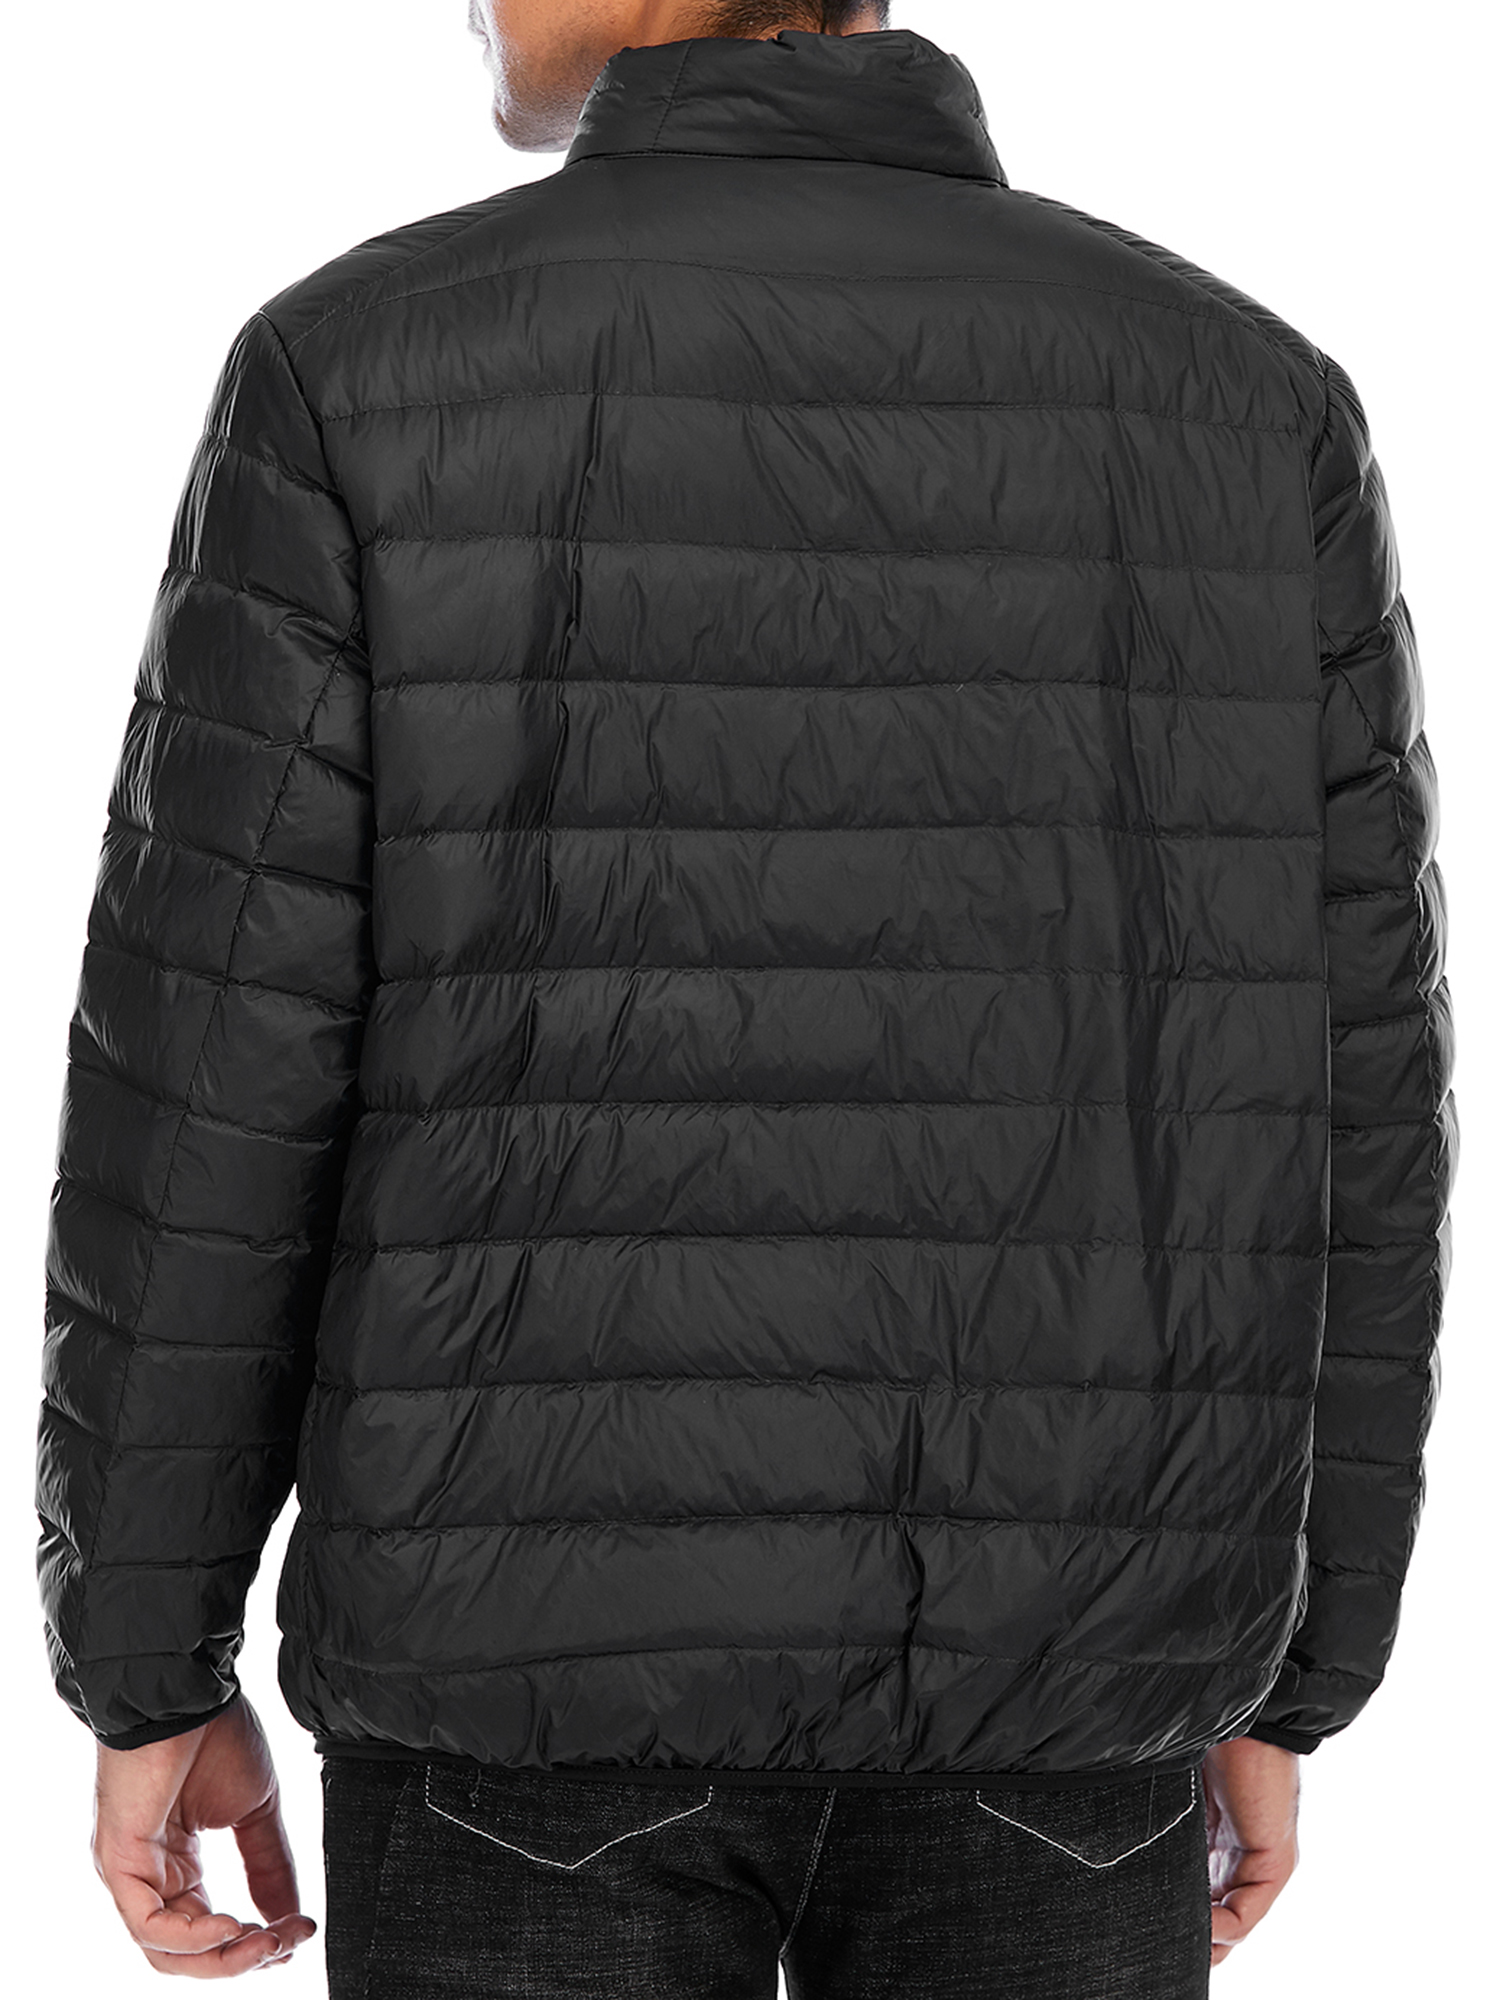 FOCUSSEXY Men Down Jacket Outwear Winter Outerwear Zip Up Windbreaker Lightweight Winter Jackets Casual Zip Up Puffer Coats Packable Puffer Jacket, Black - image 2 of 7